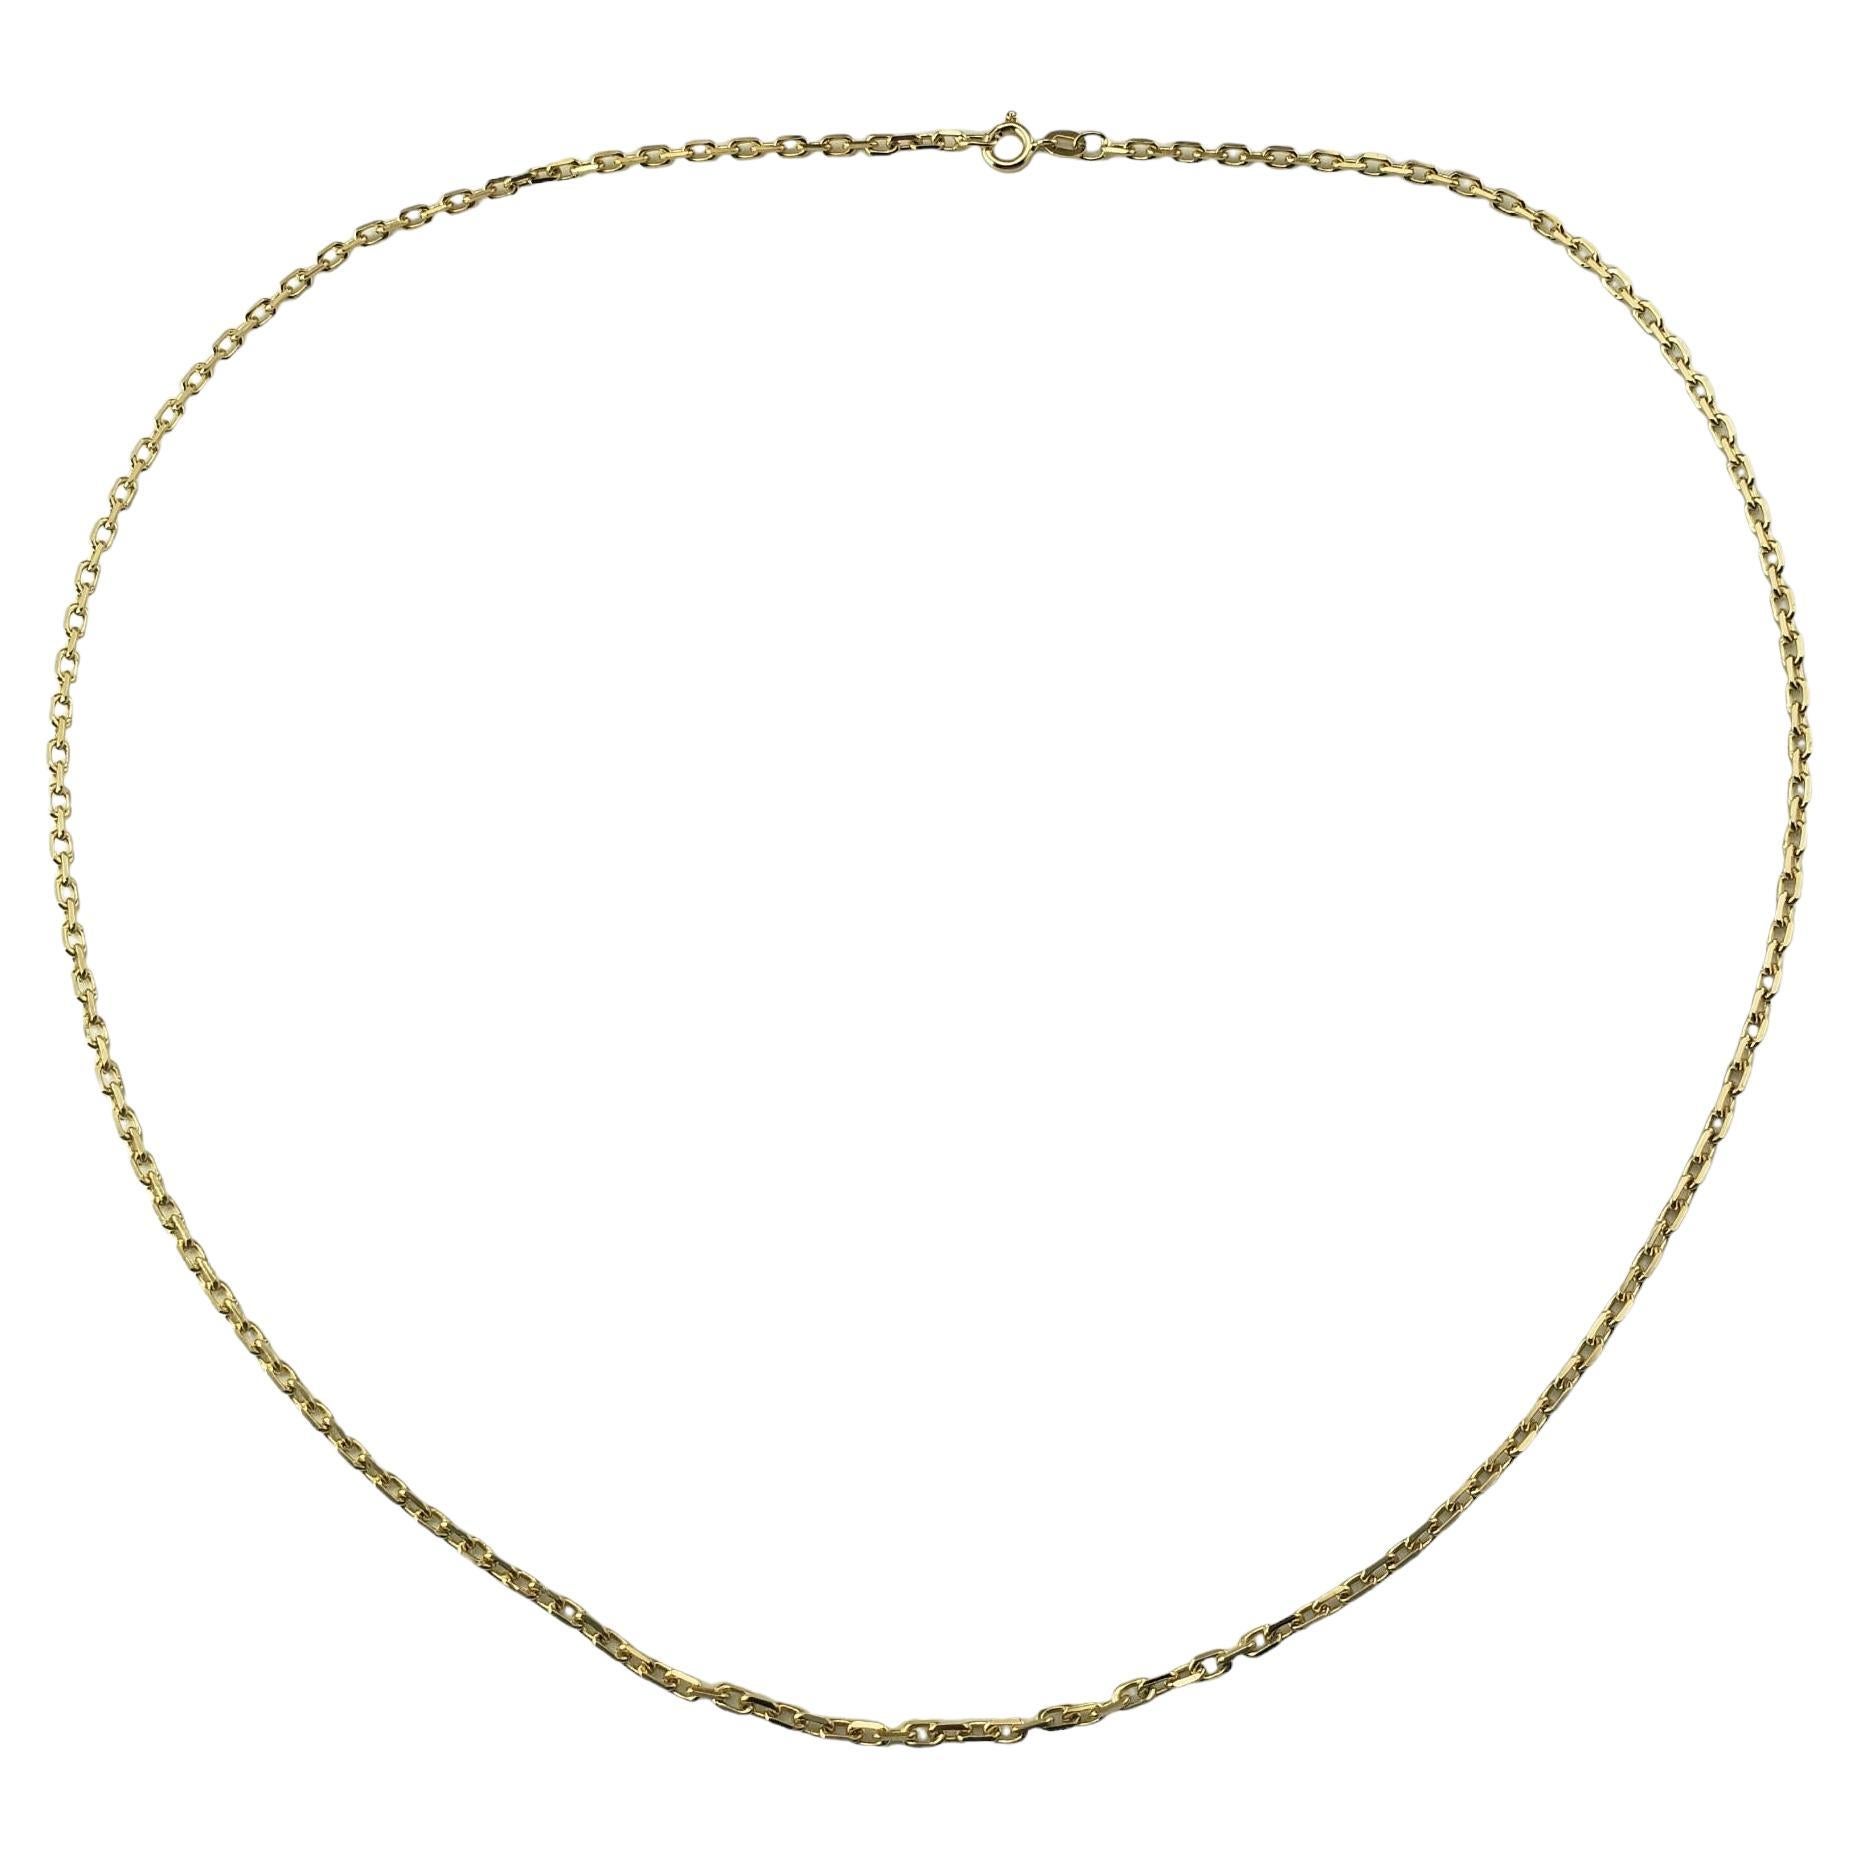 14 Karat Yellow Gold Link Necklace #15605